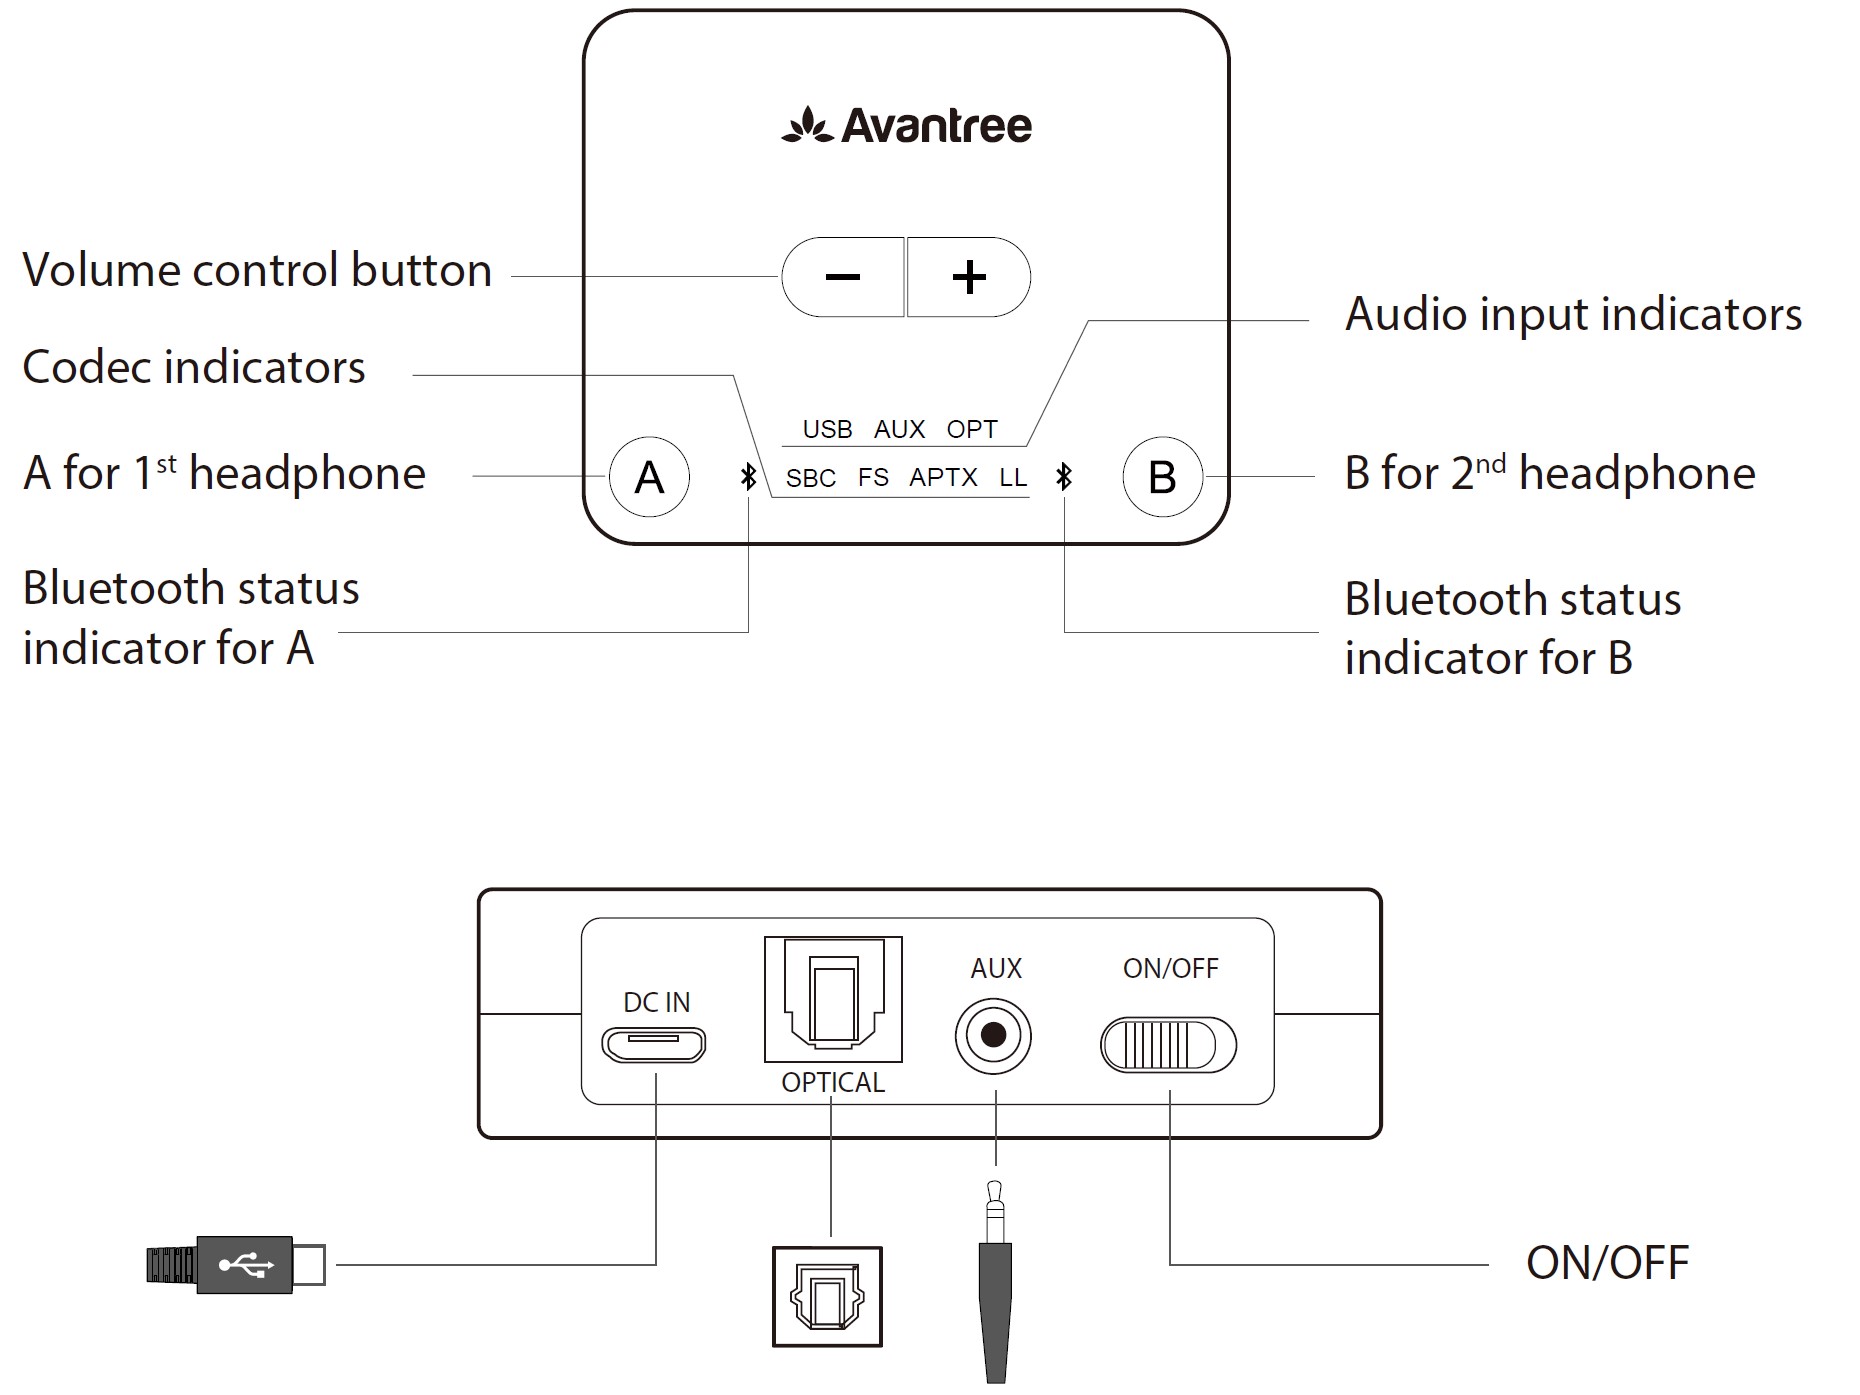 Avantree-TC-418-P-Audikast-Plus-Bluetooth-Transmitter-User-Manual-1